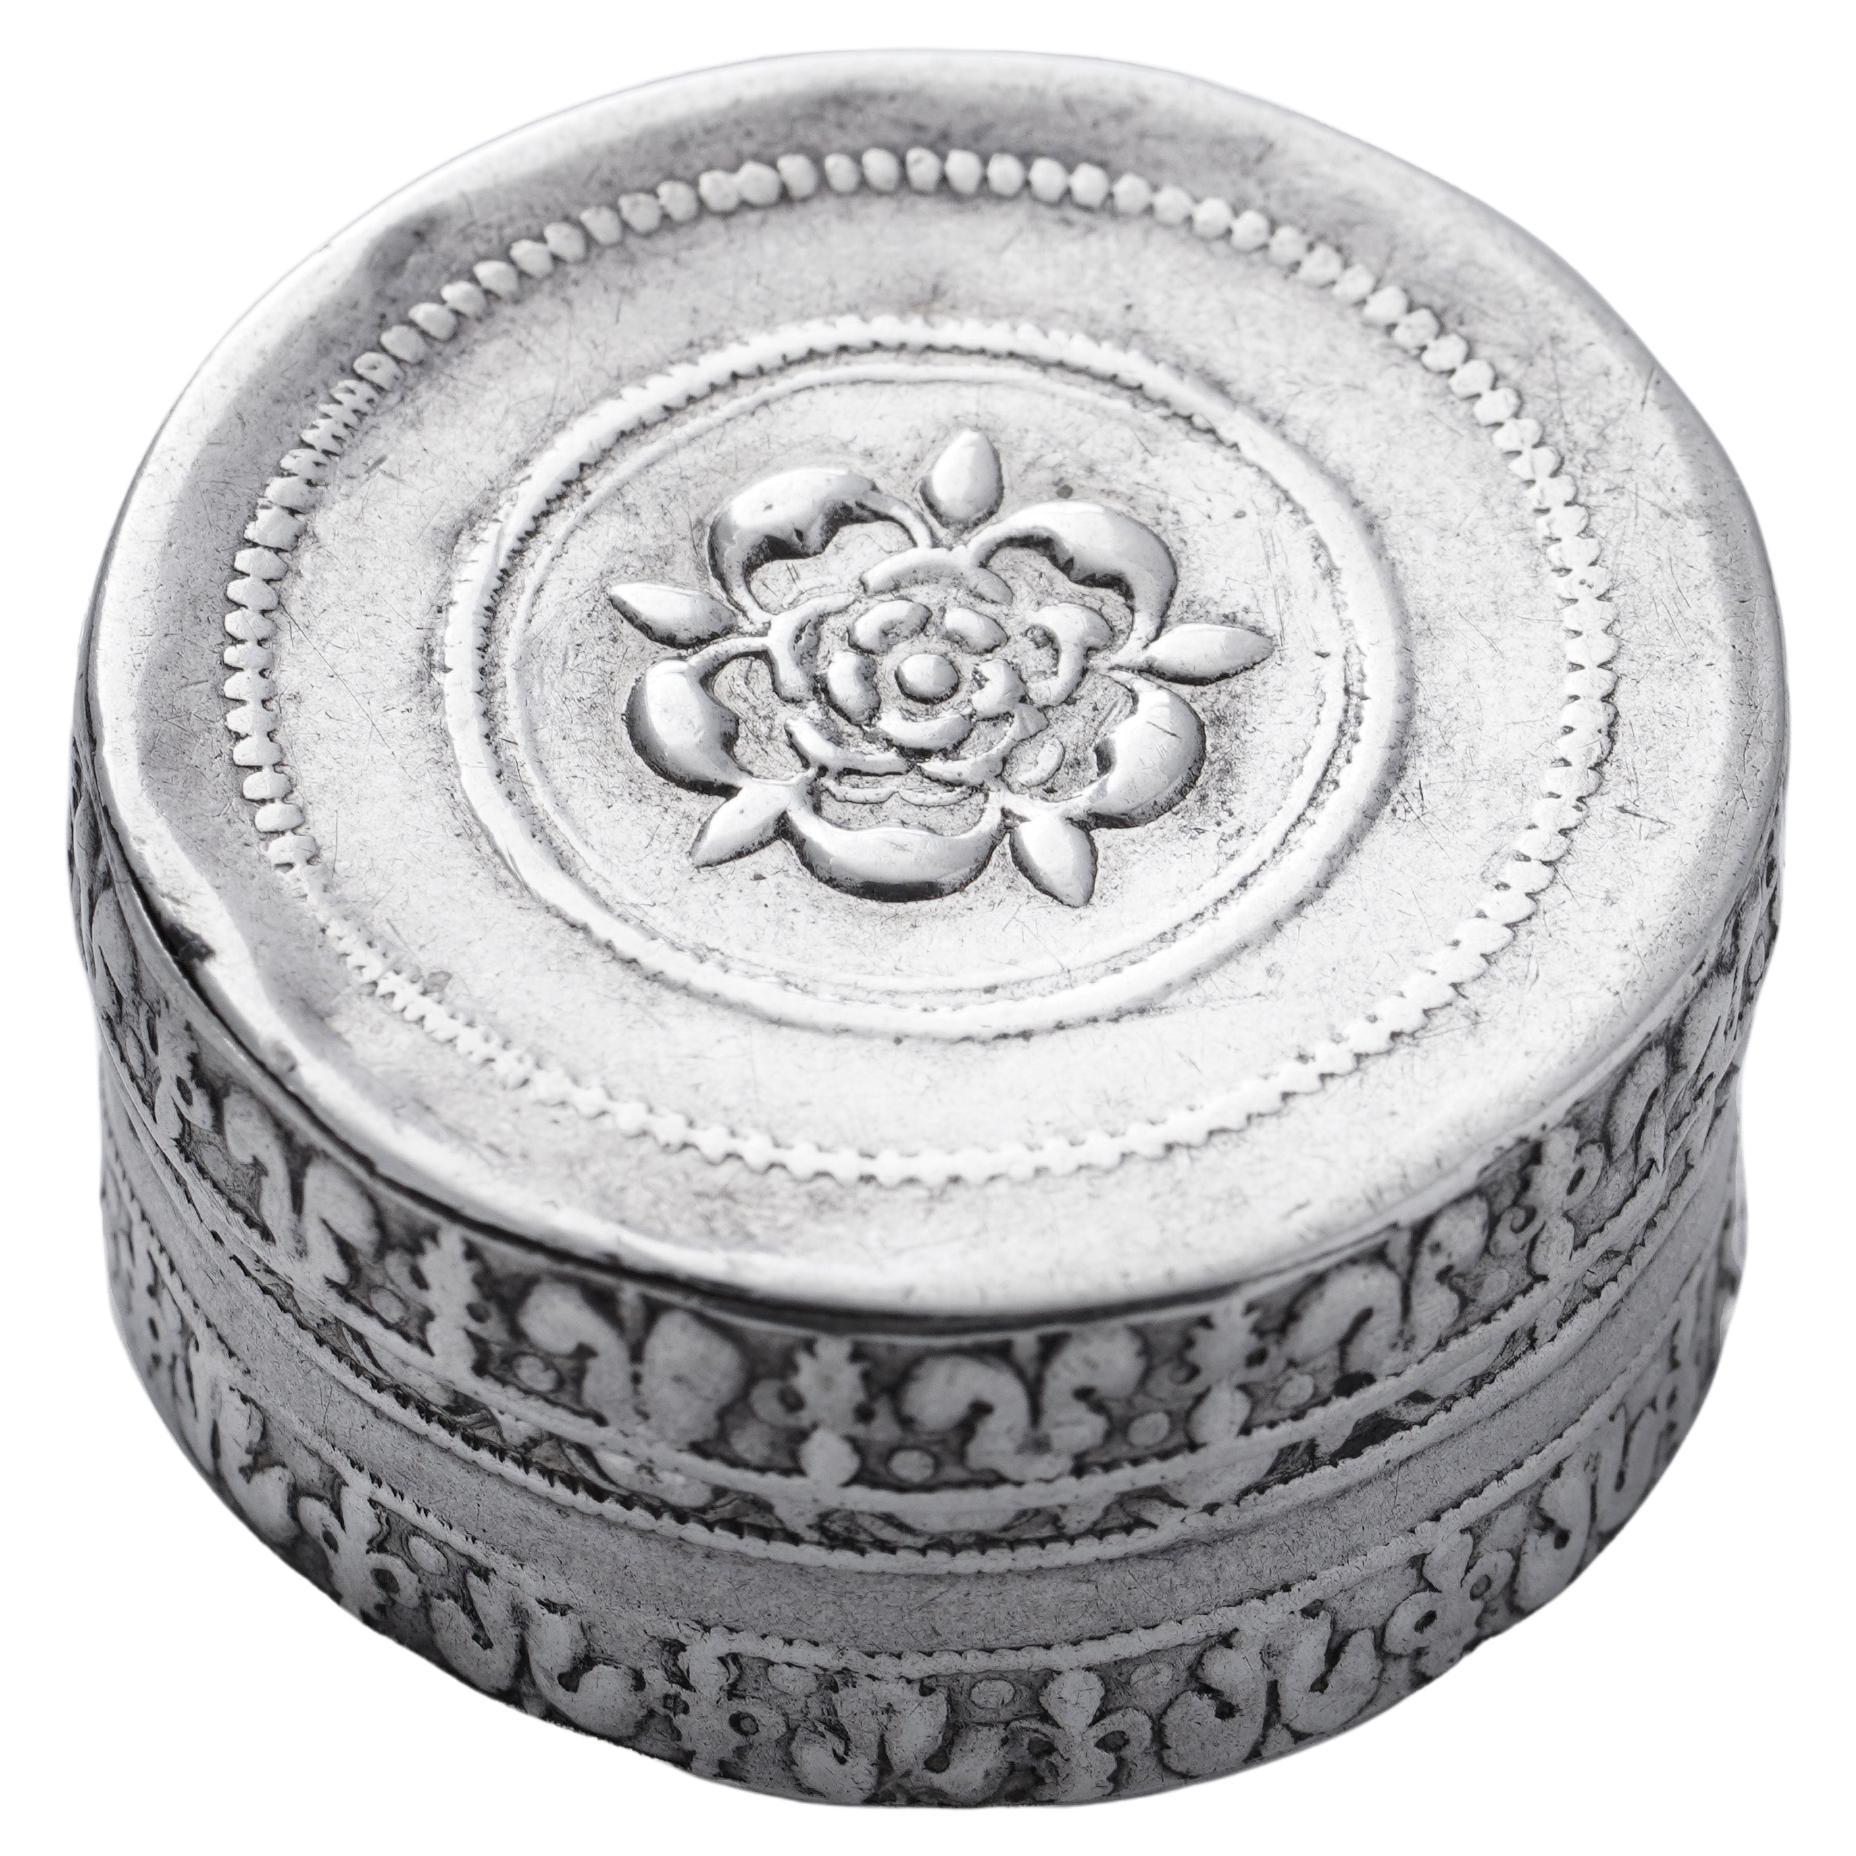 Antique 17th century round circular patch box with Tudor rose 